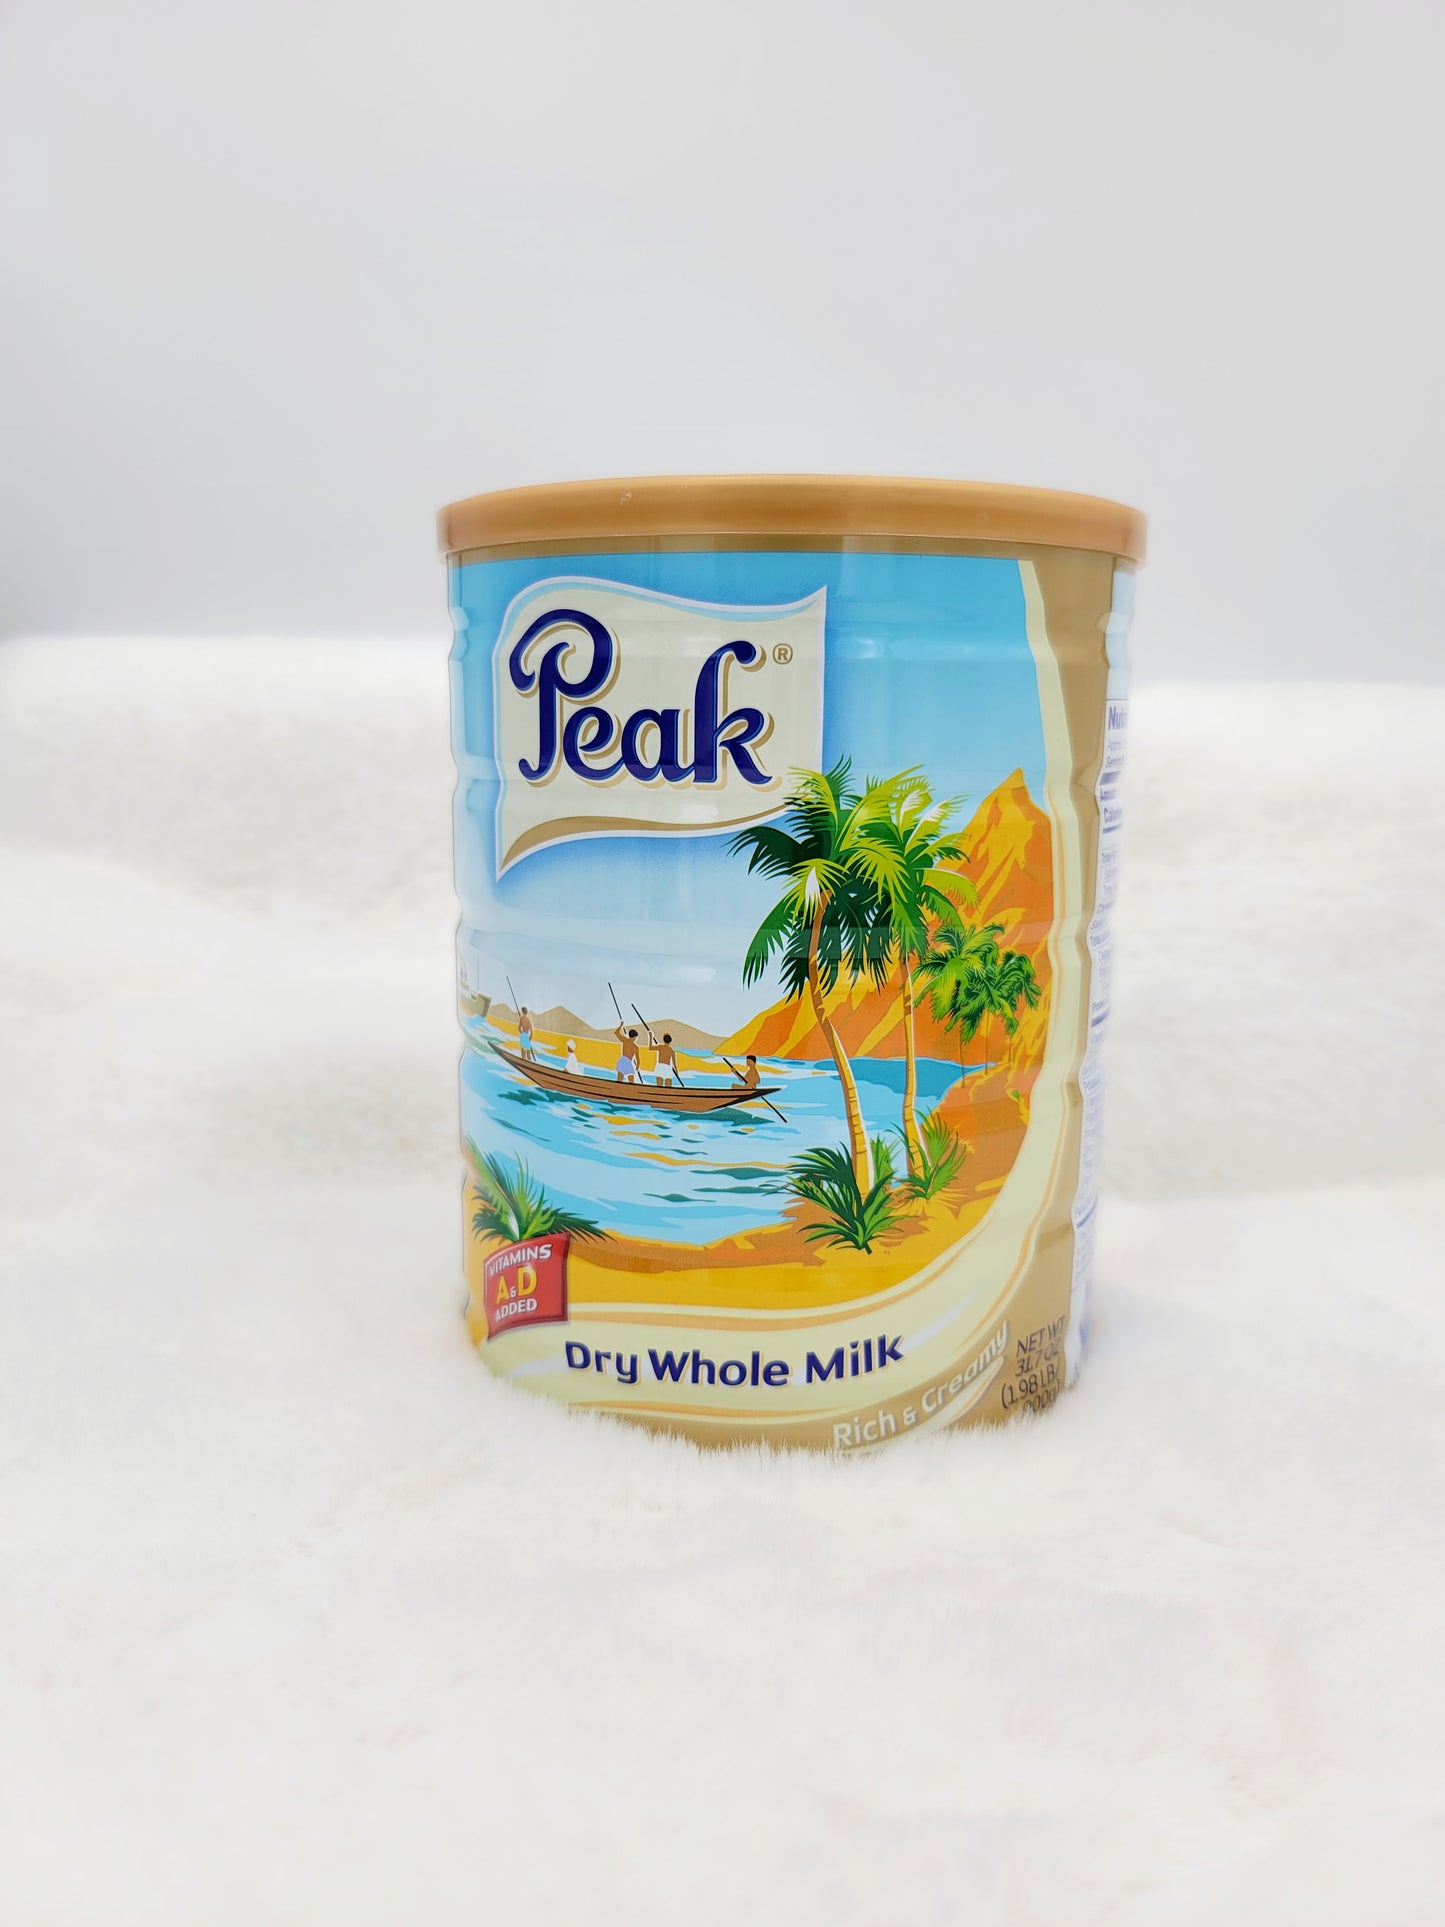 Original Nigerian Peak milk size 400g